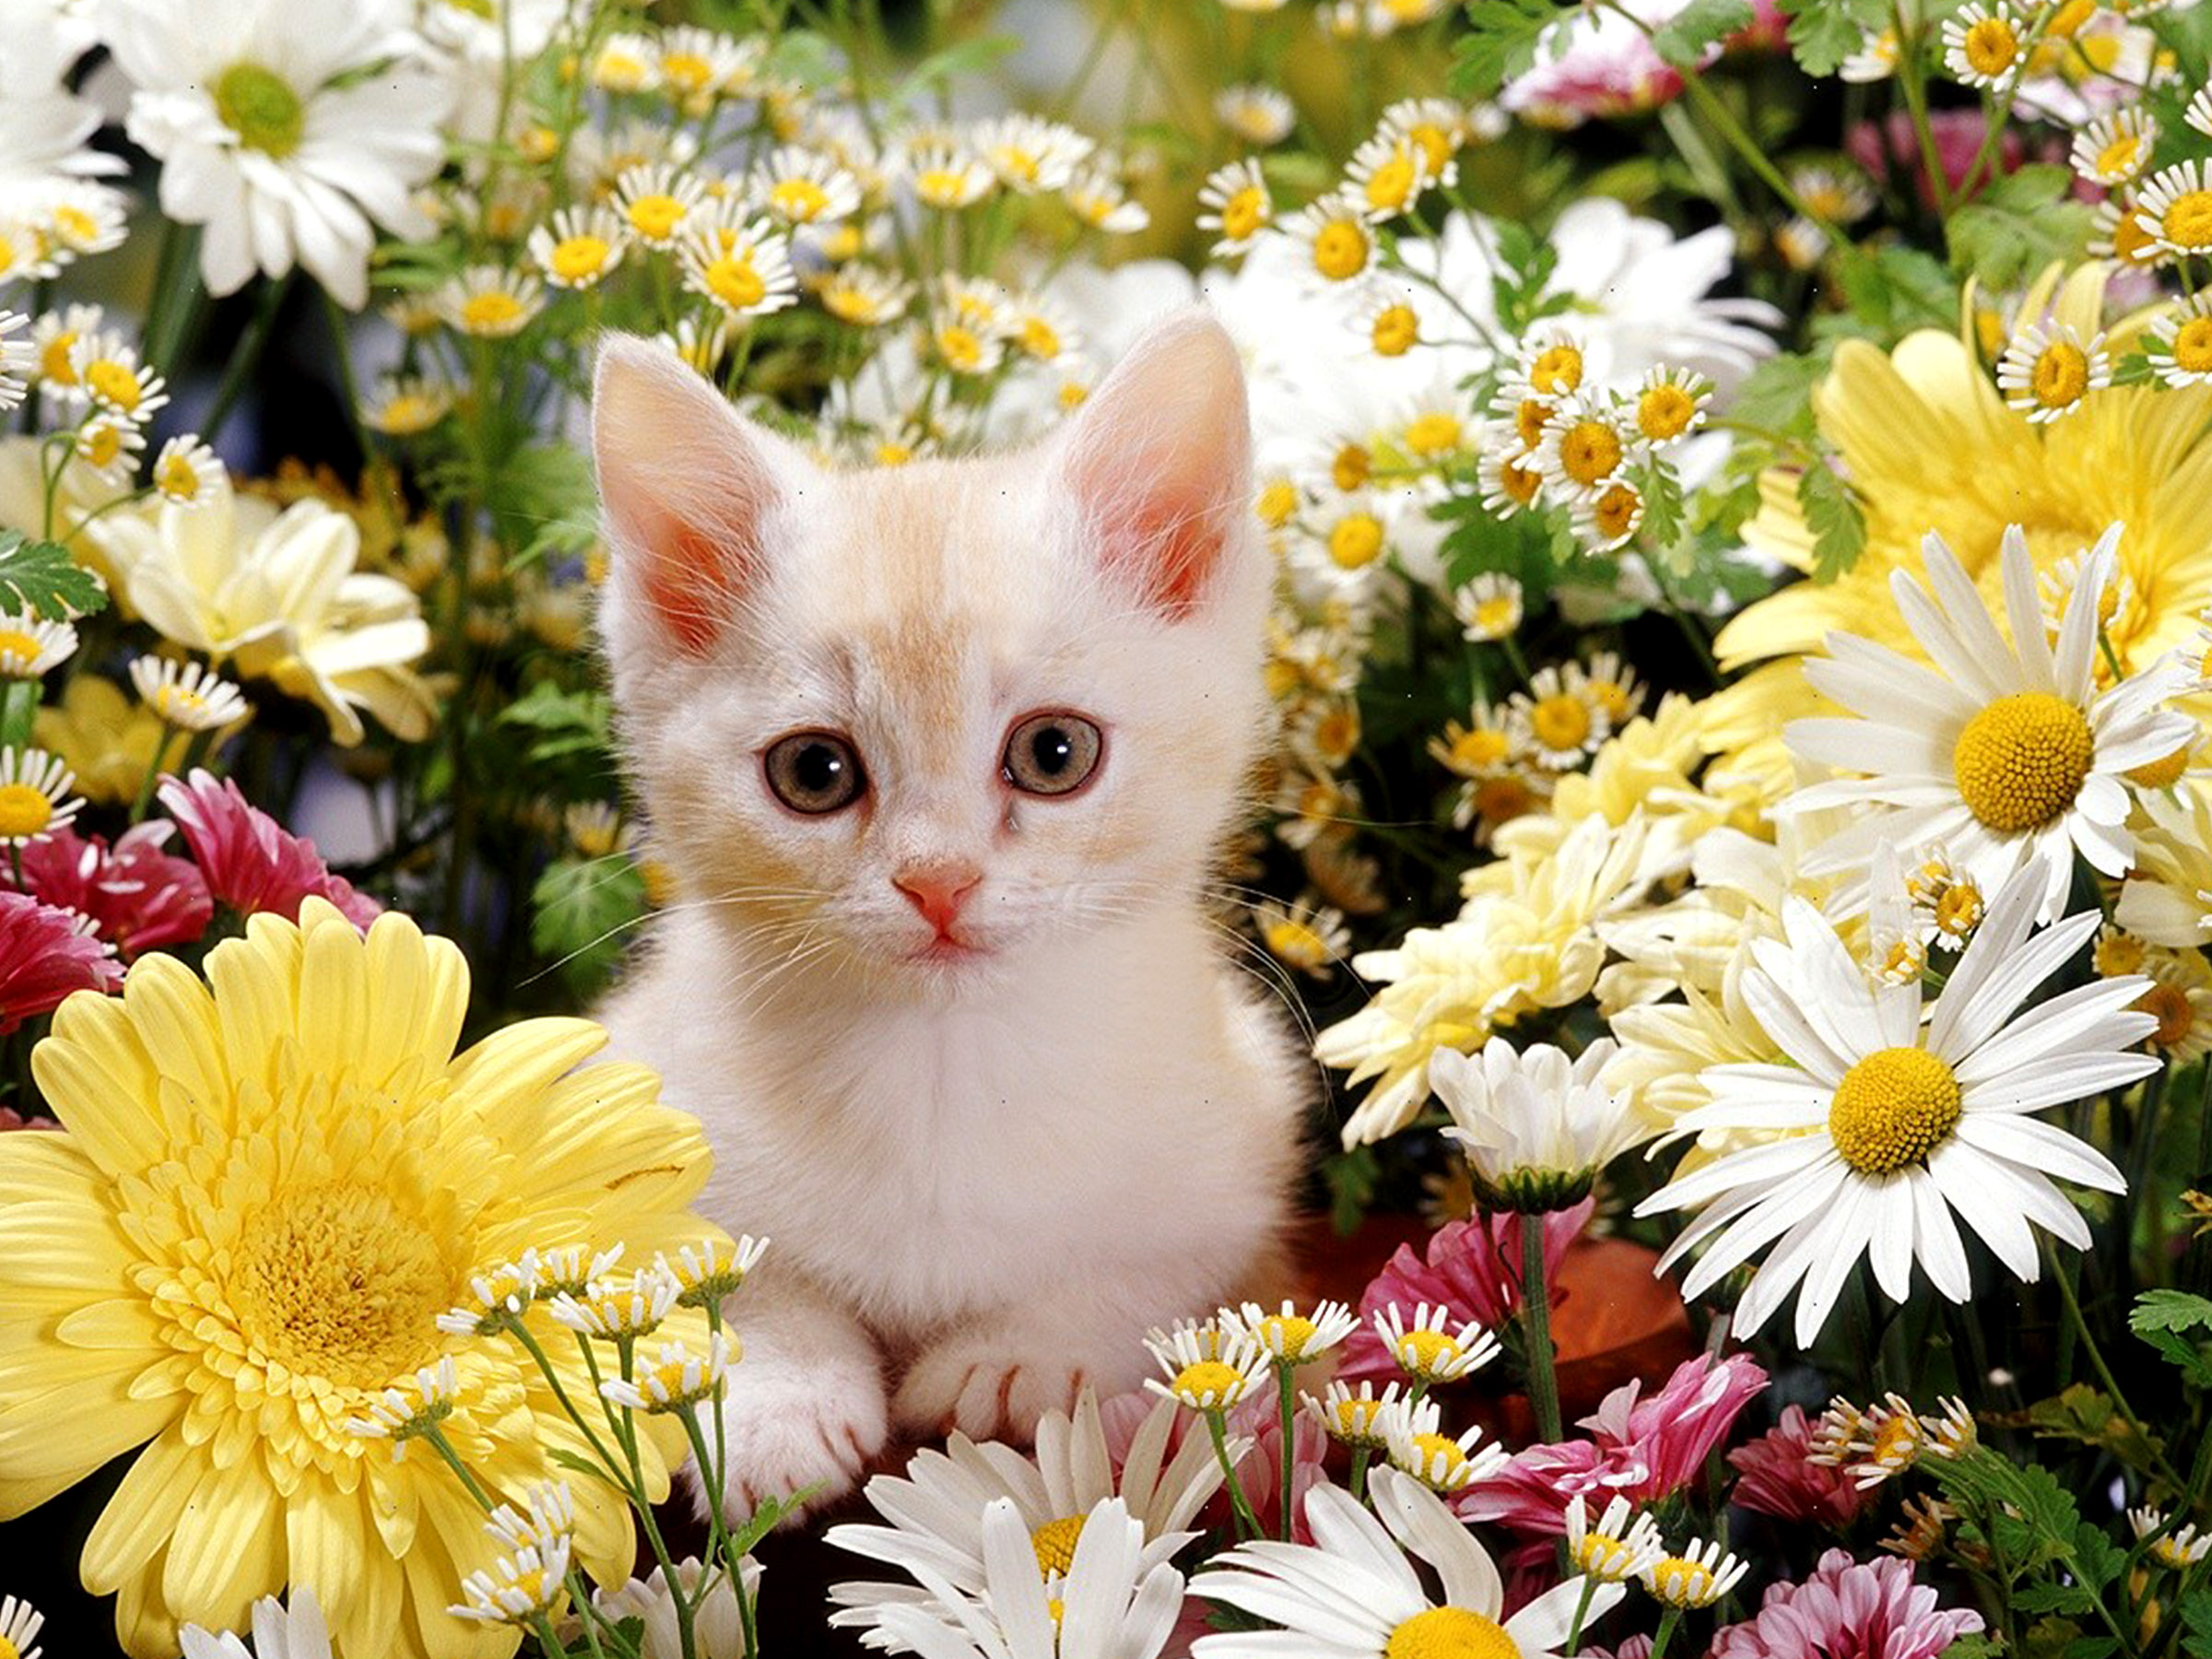 47-479768_cute-cat-wallpapers-kitten-wallpapers-cute-flower-wallpaper.jpg